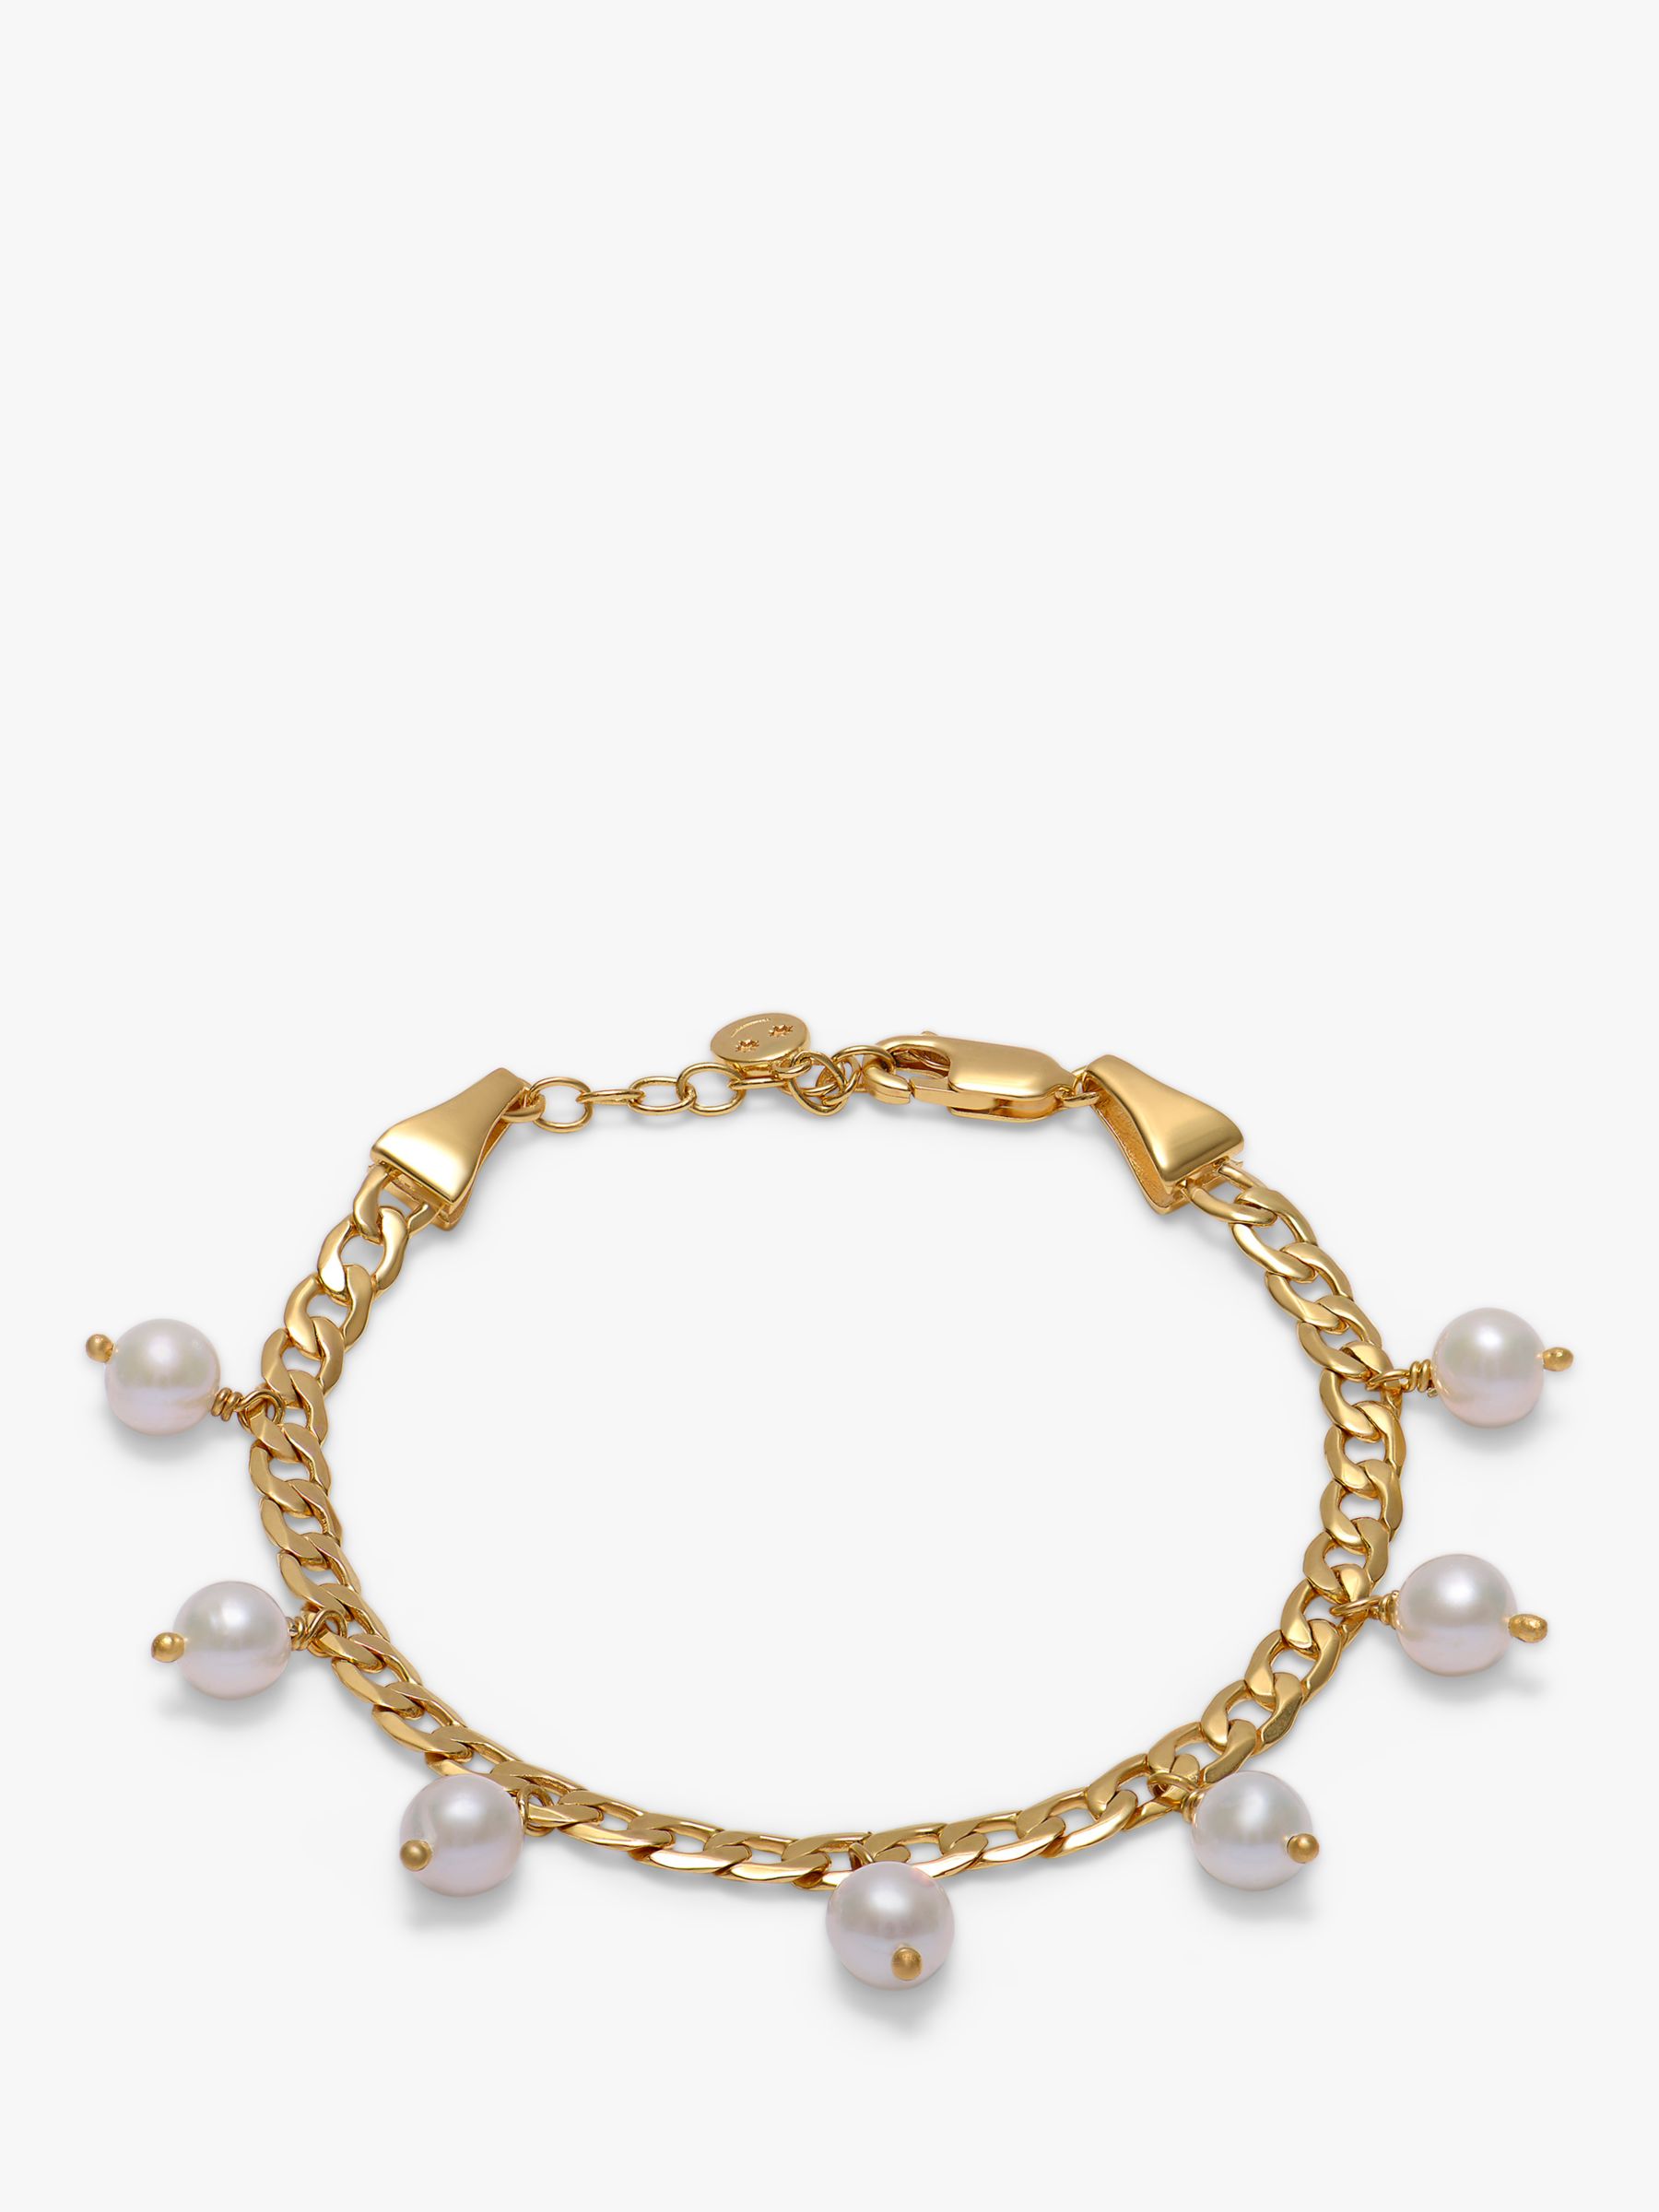 Bracelets and Bangles - Rachel Jackson Jewellery